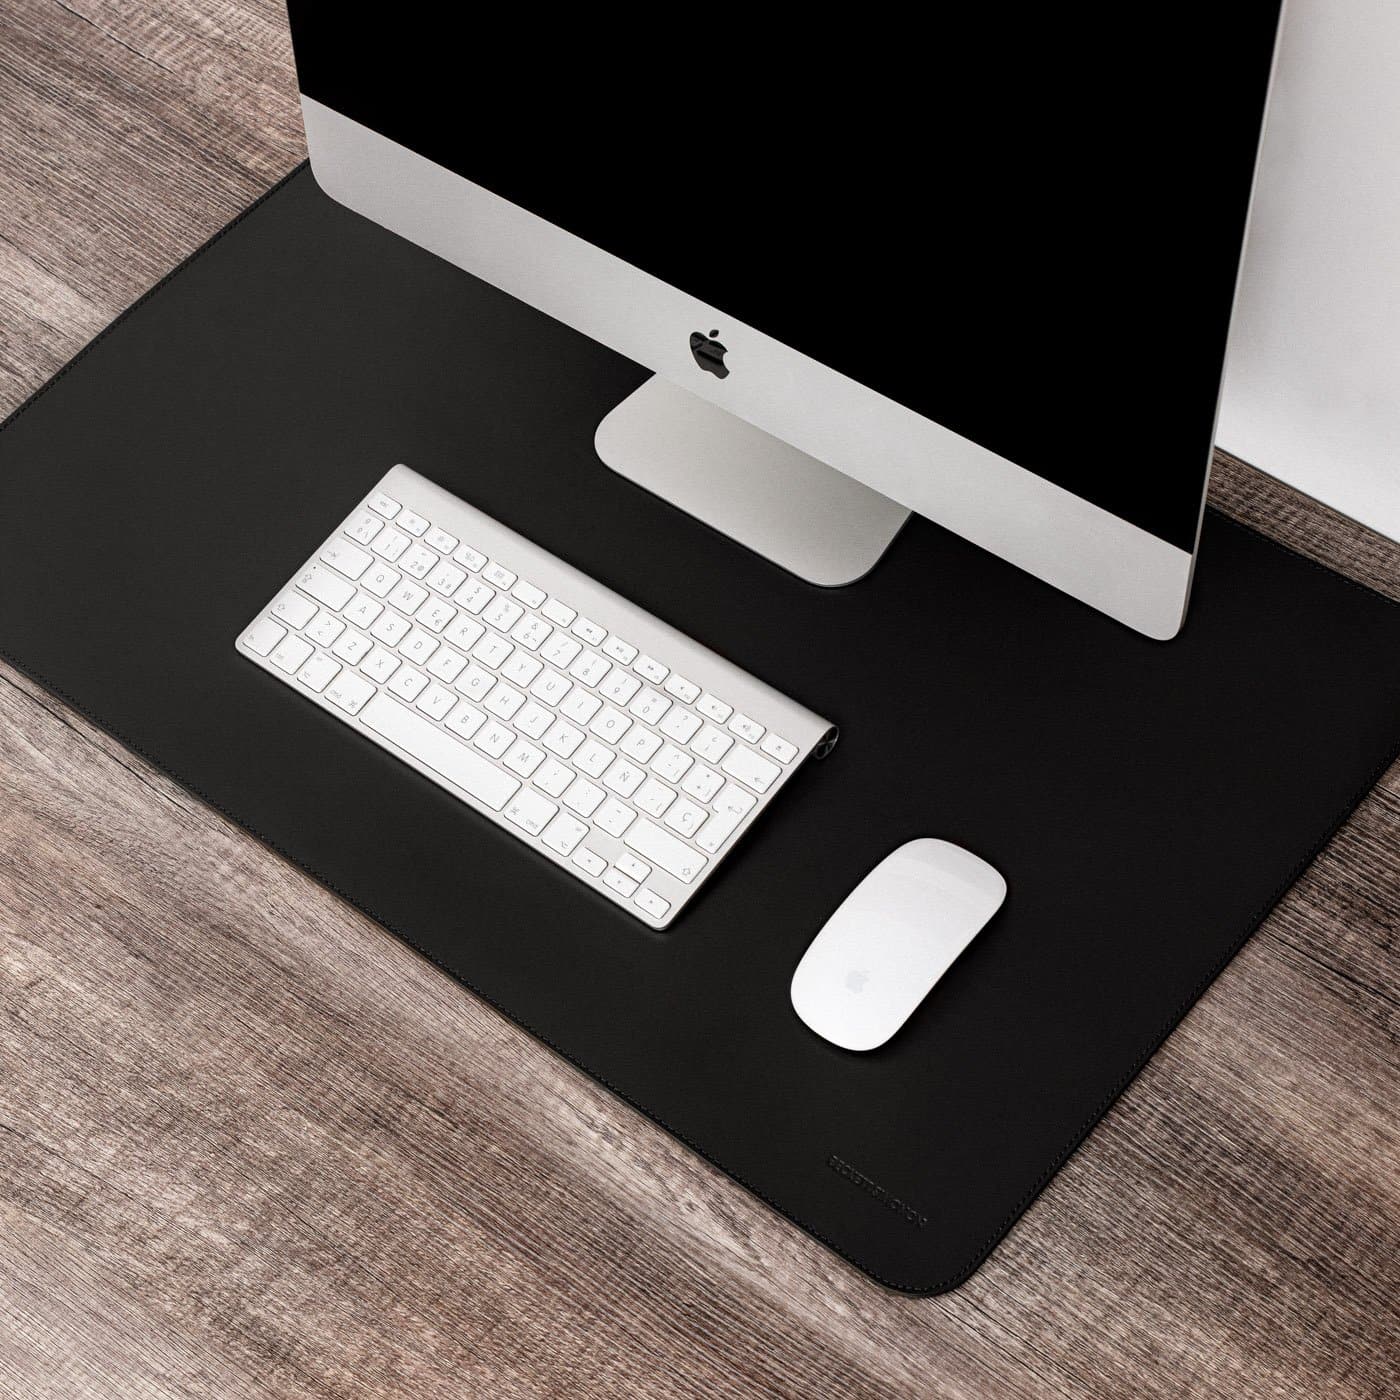 deskpad DESK PAD Mousepad - deskpad 